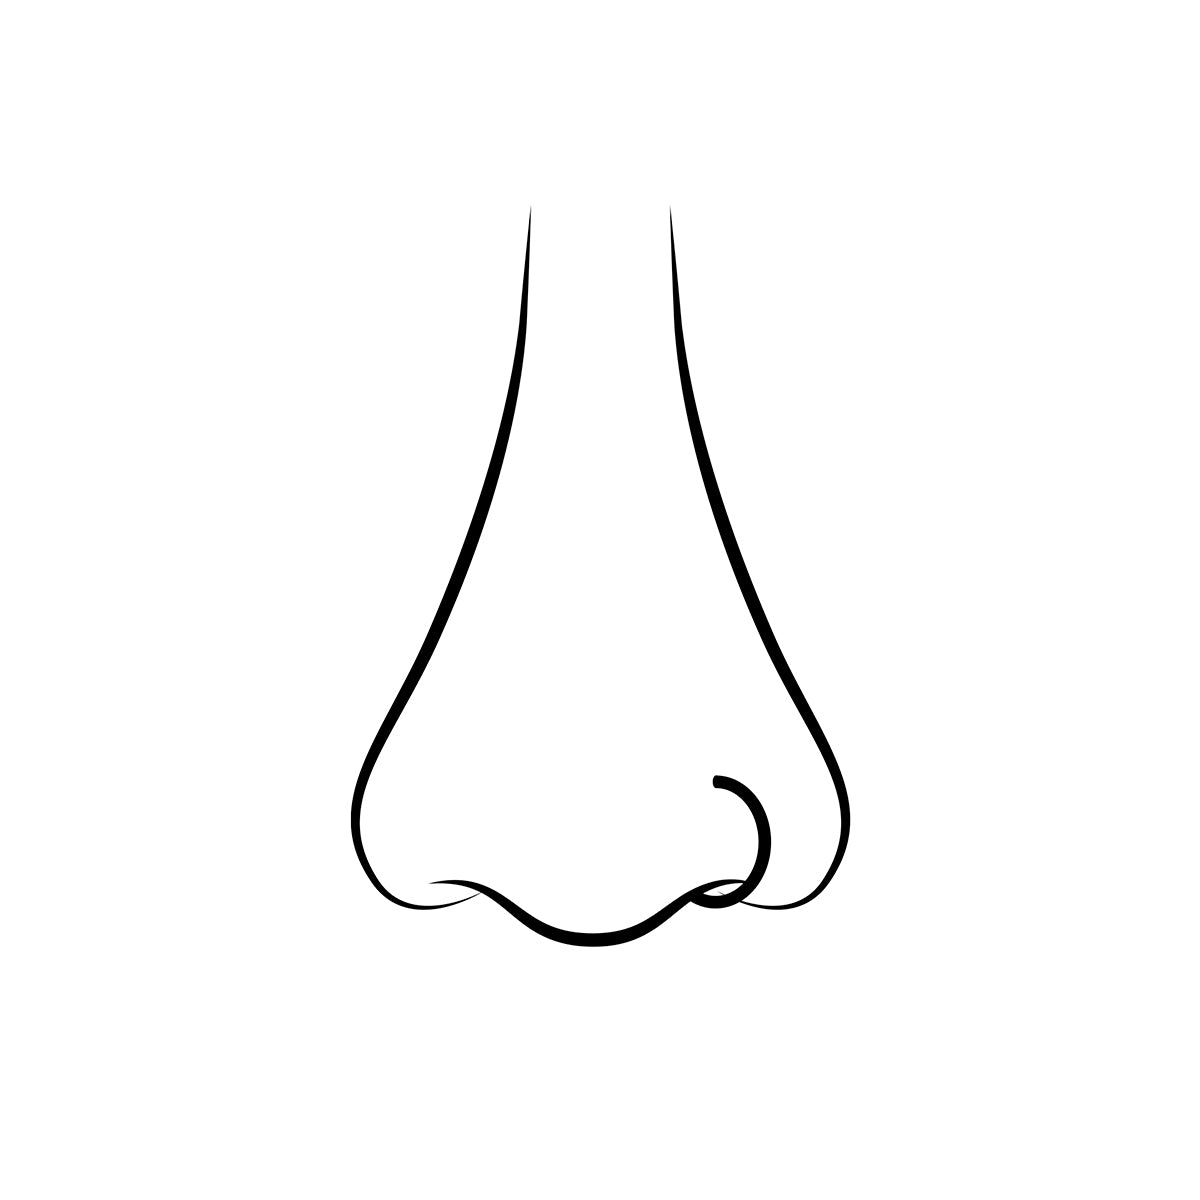 Piercing aro doble espiral de nariz de acero quirúrgico